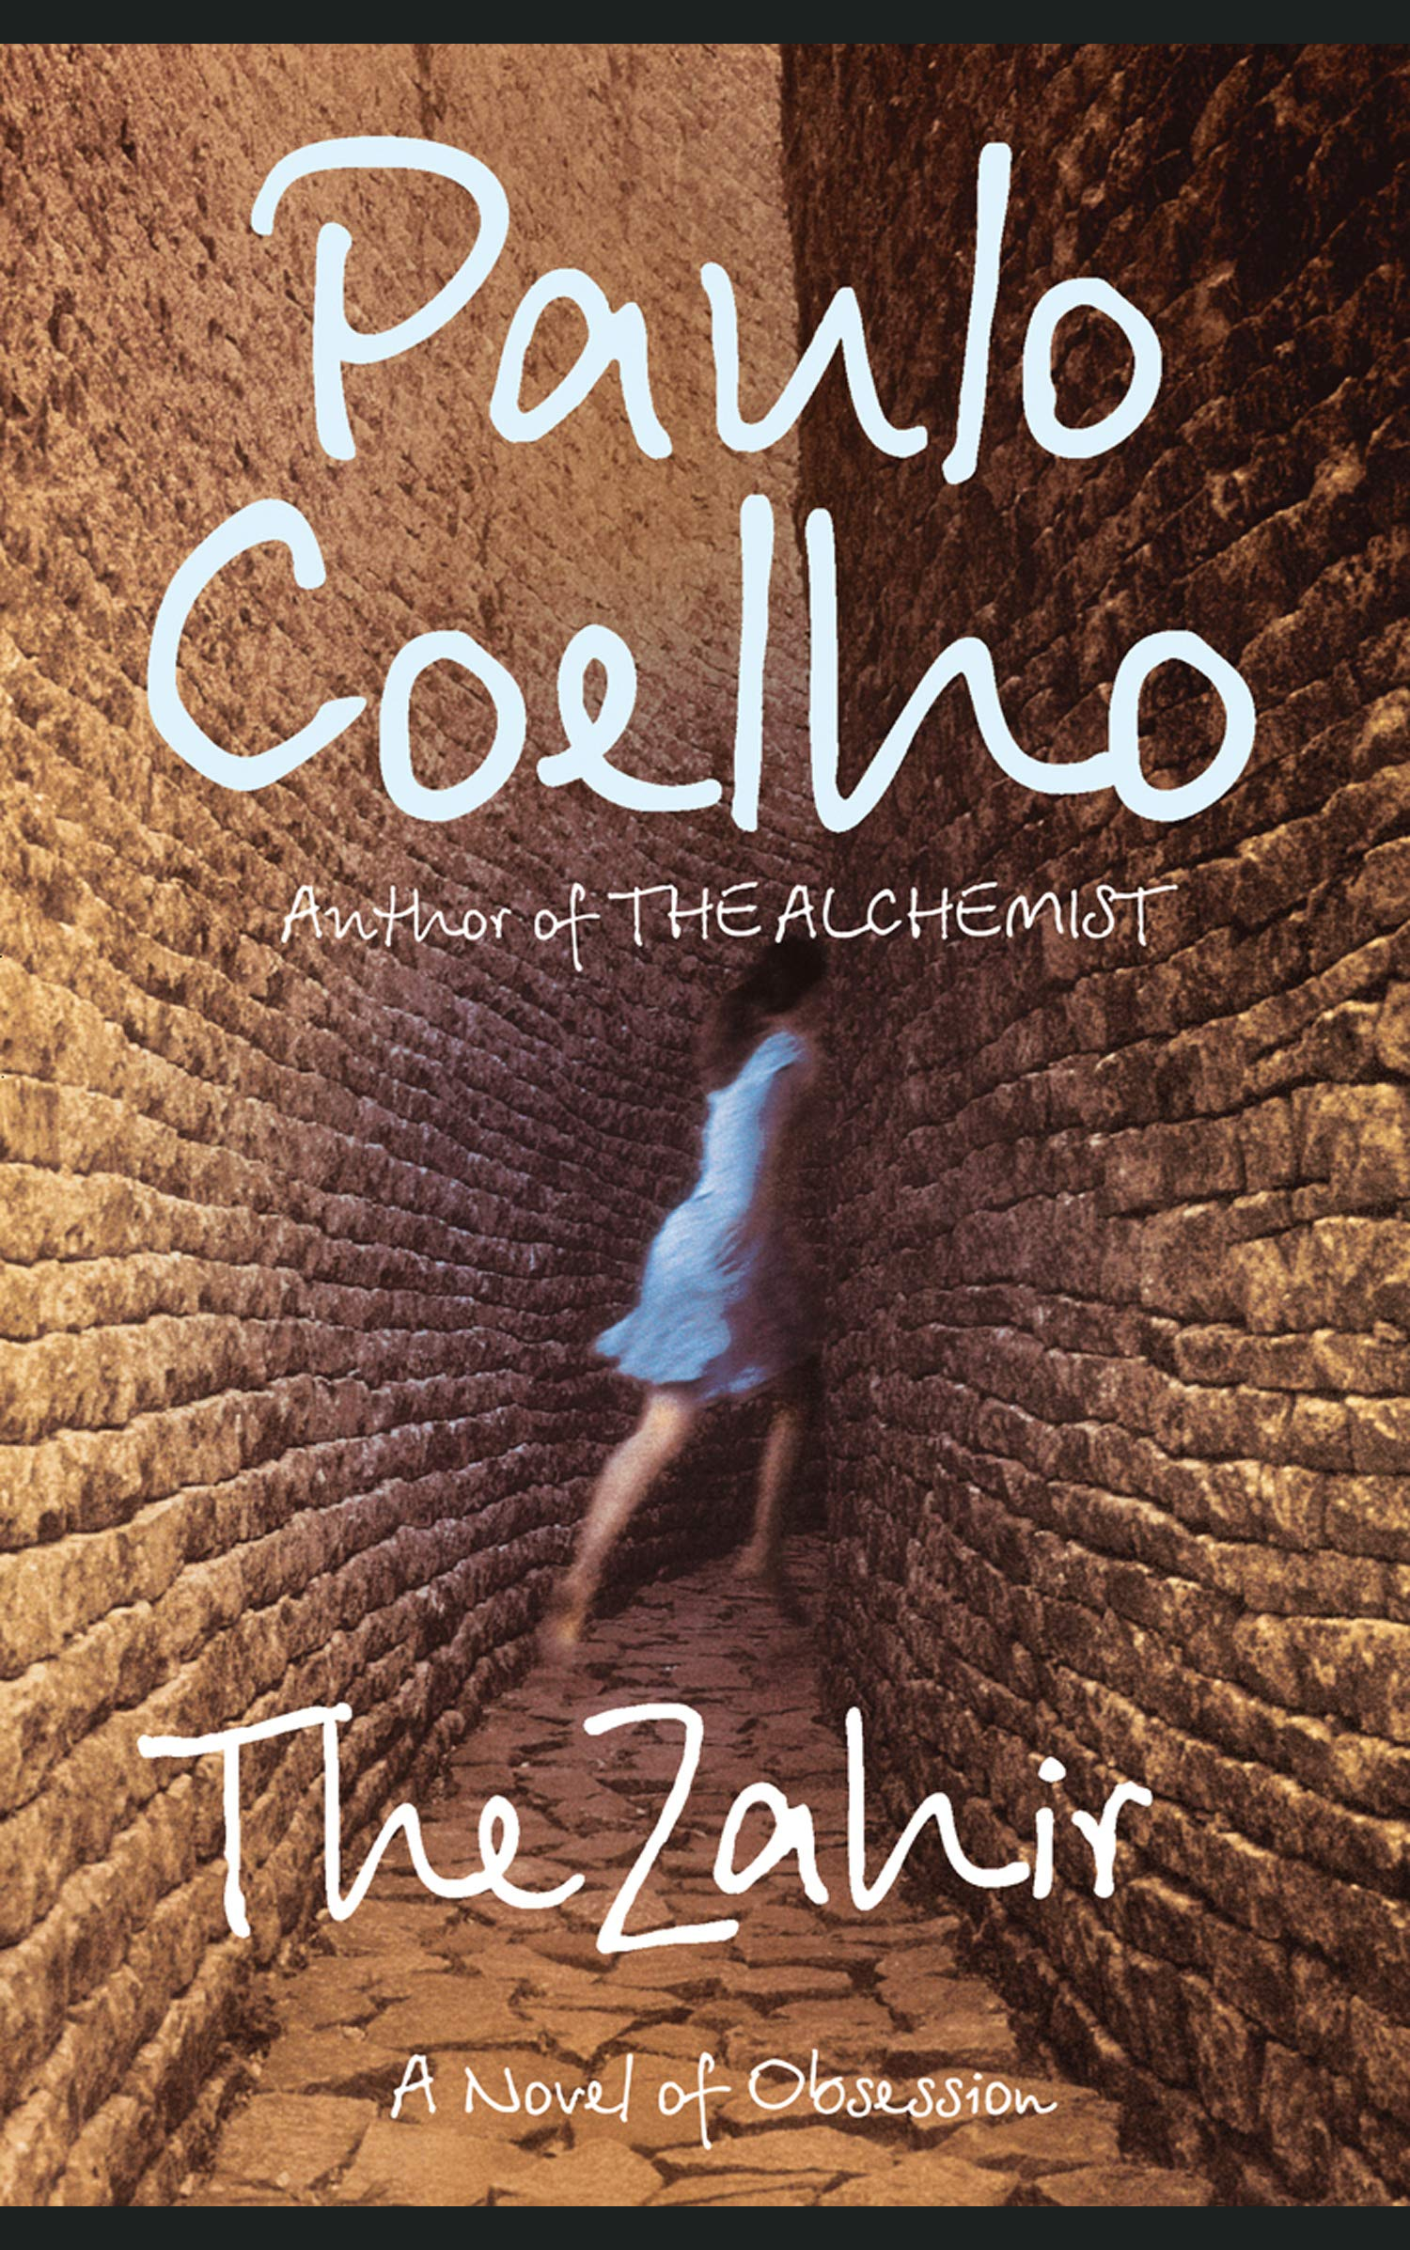 THE ZAHIR by PAULO COELHO